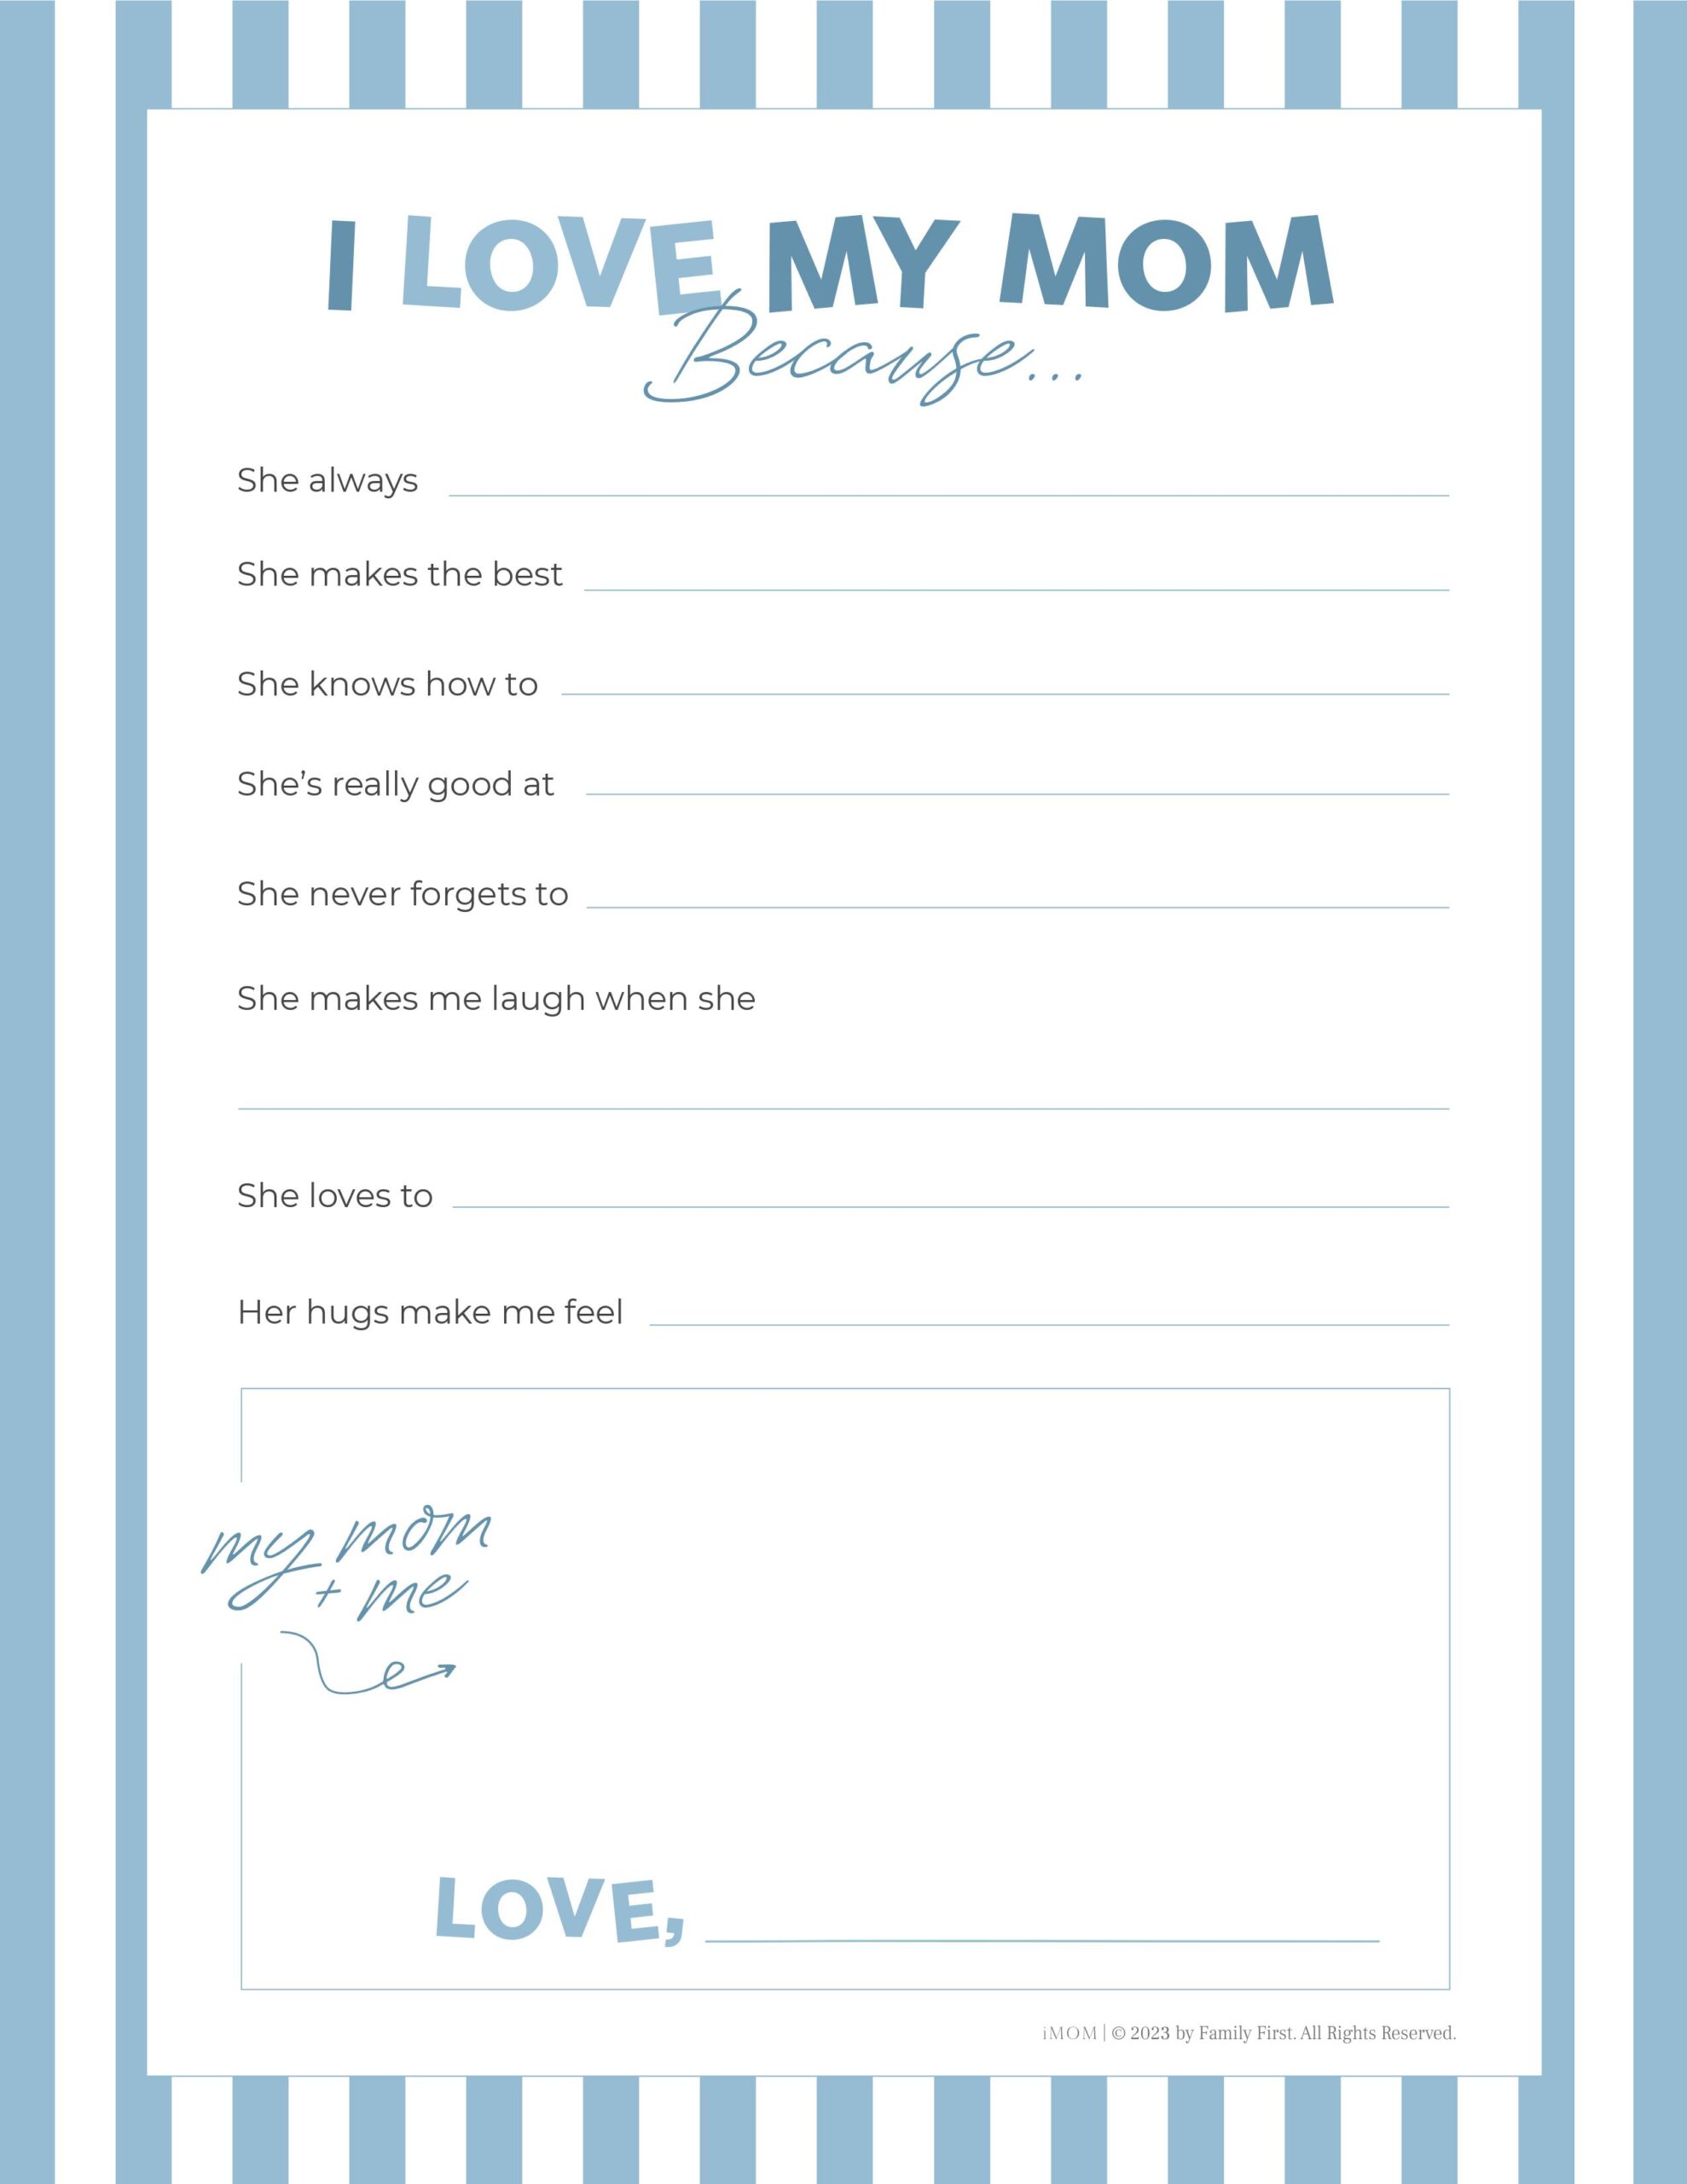 "I Love My Mom Because..." Printable